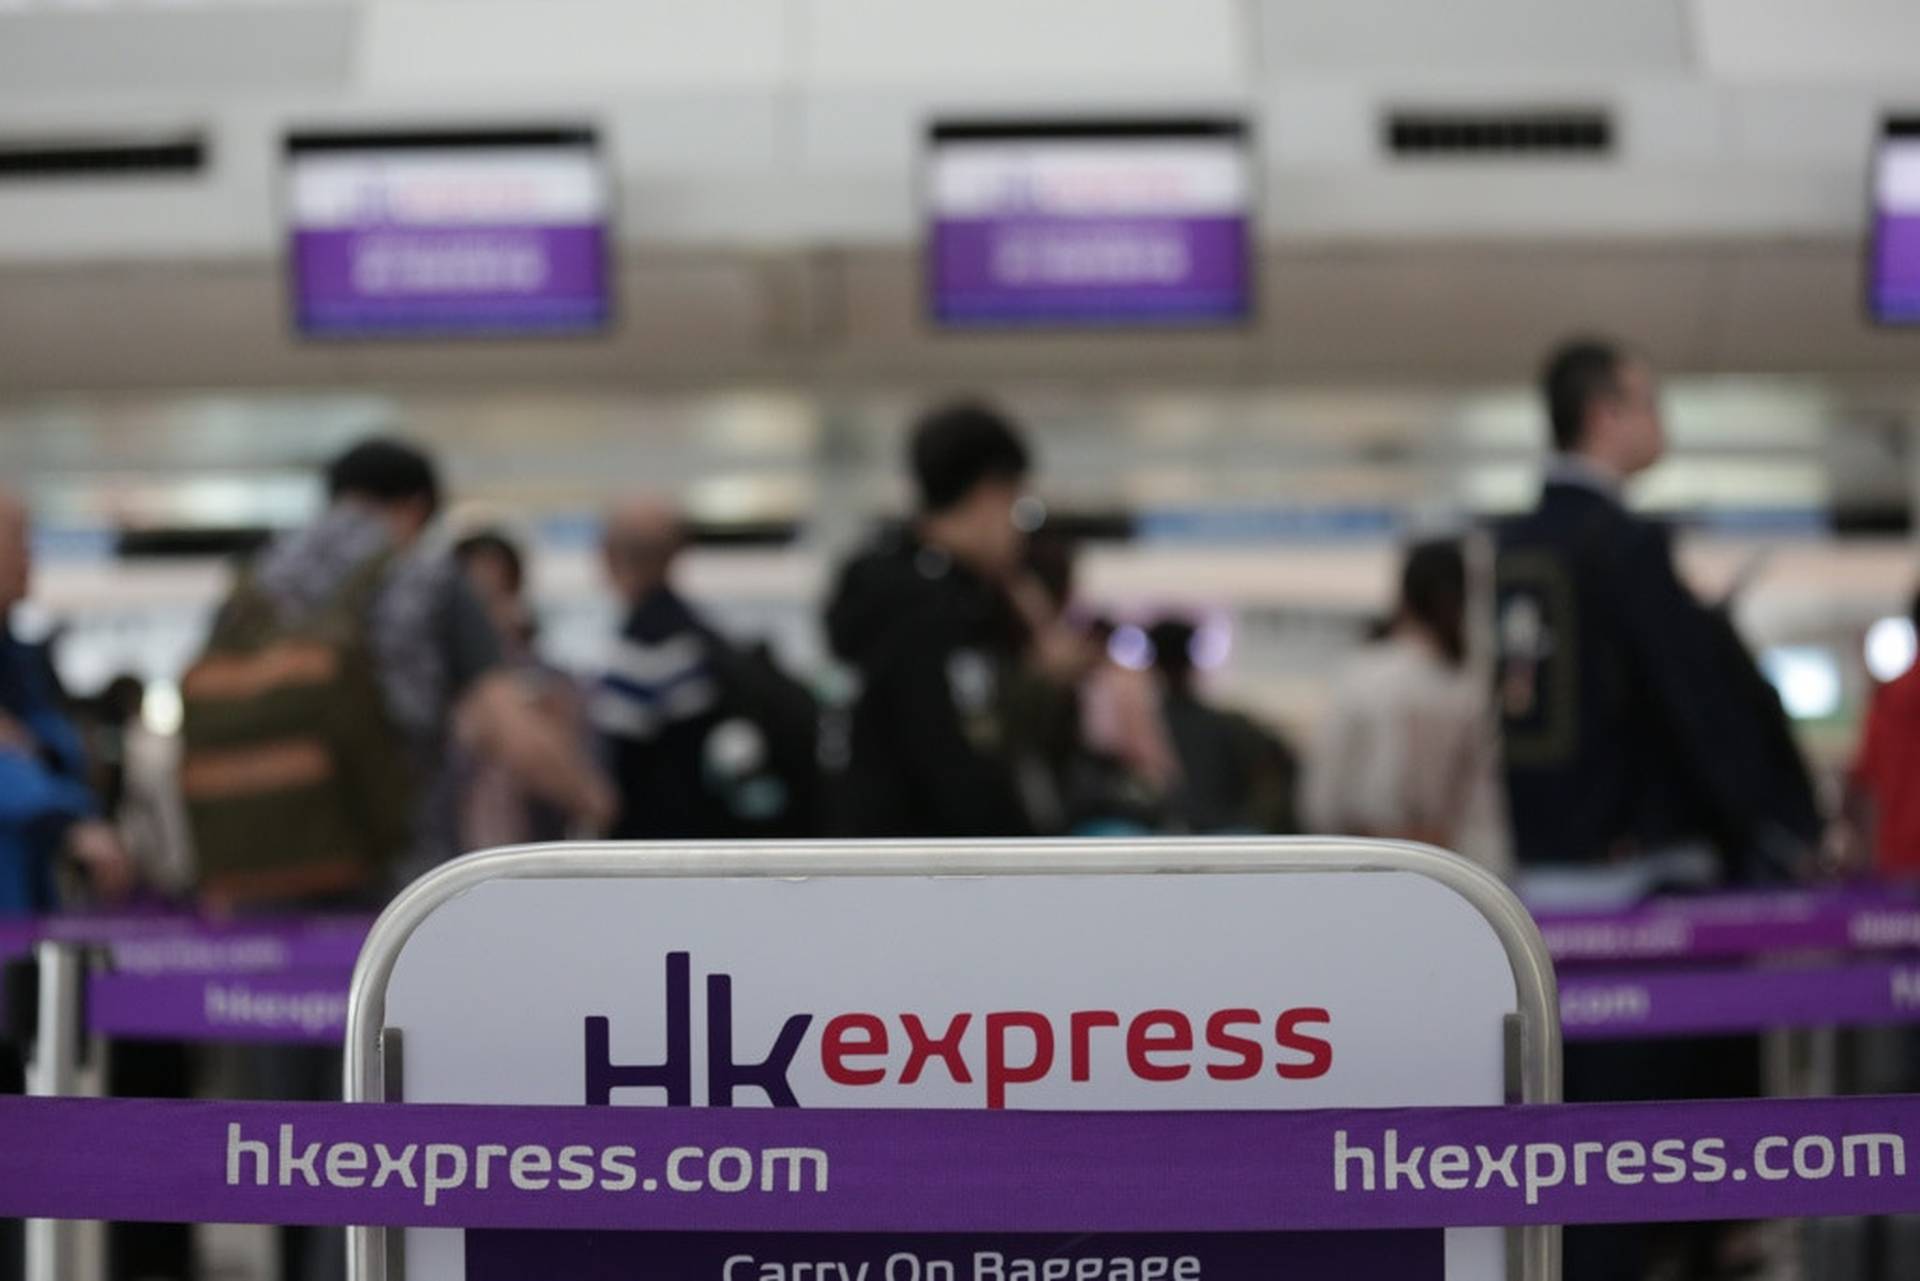 HK Express貼圖預告增新航點　網民猜測台北及高雄